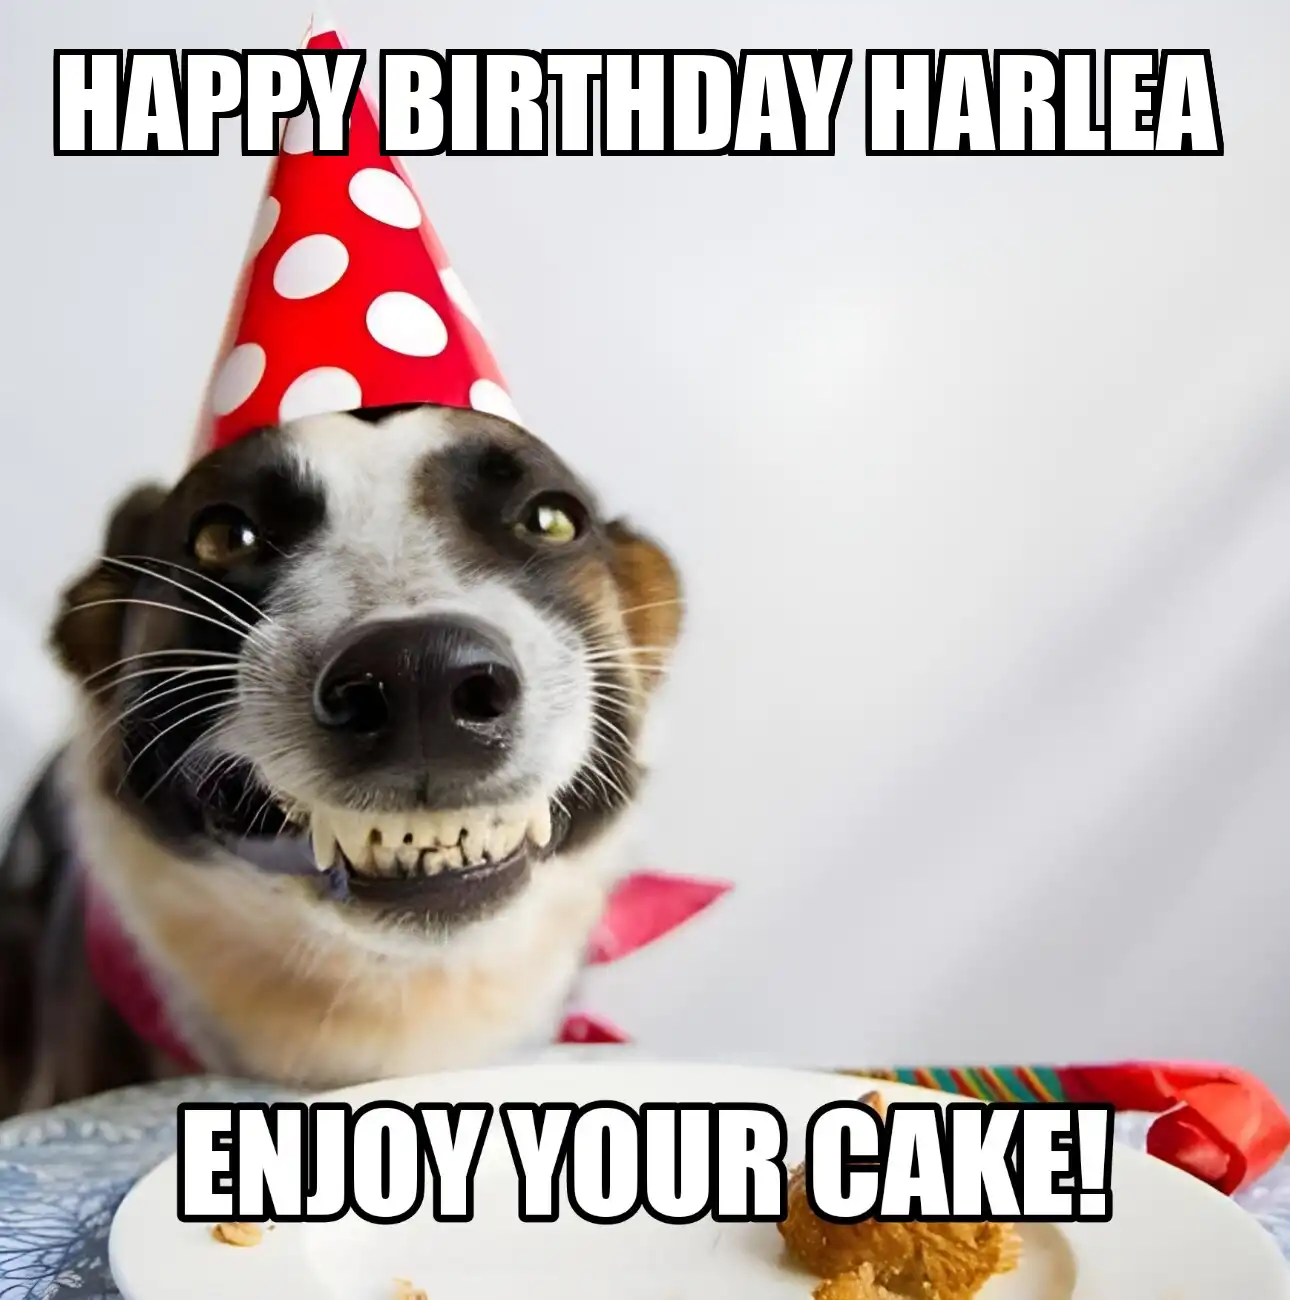 Happy Birthday Harlea Enjoy Your Cake Dog Meme